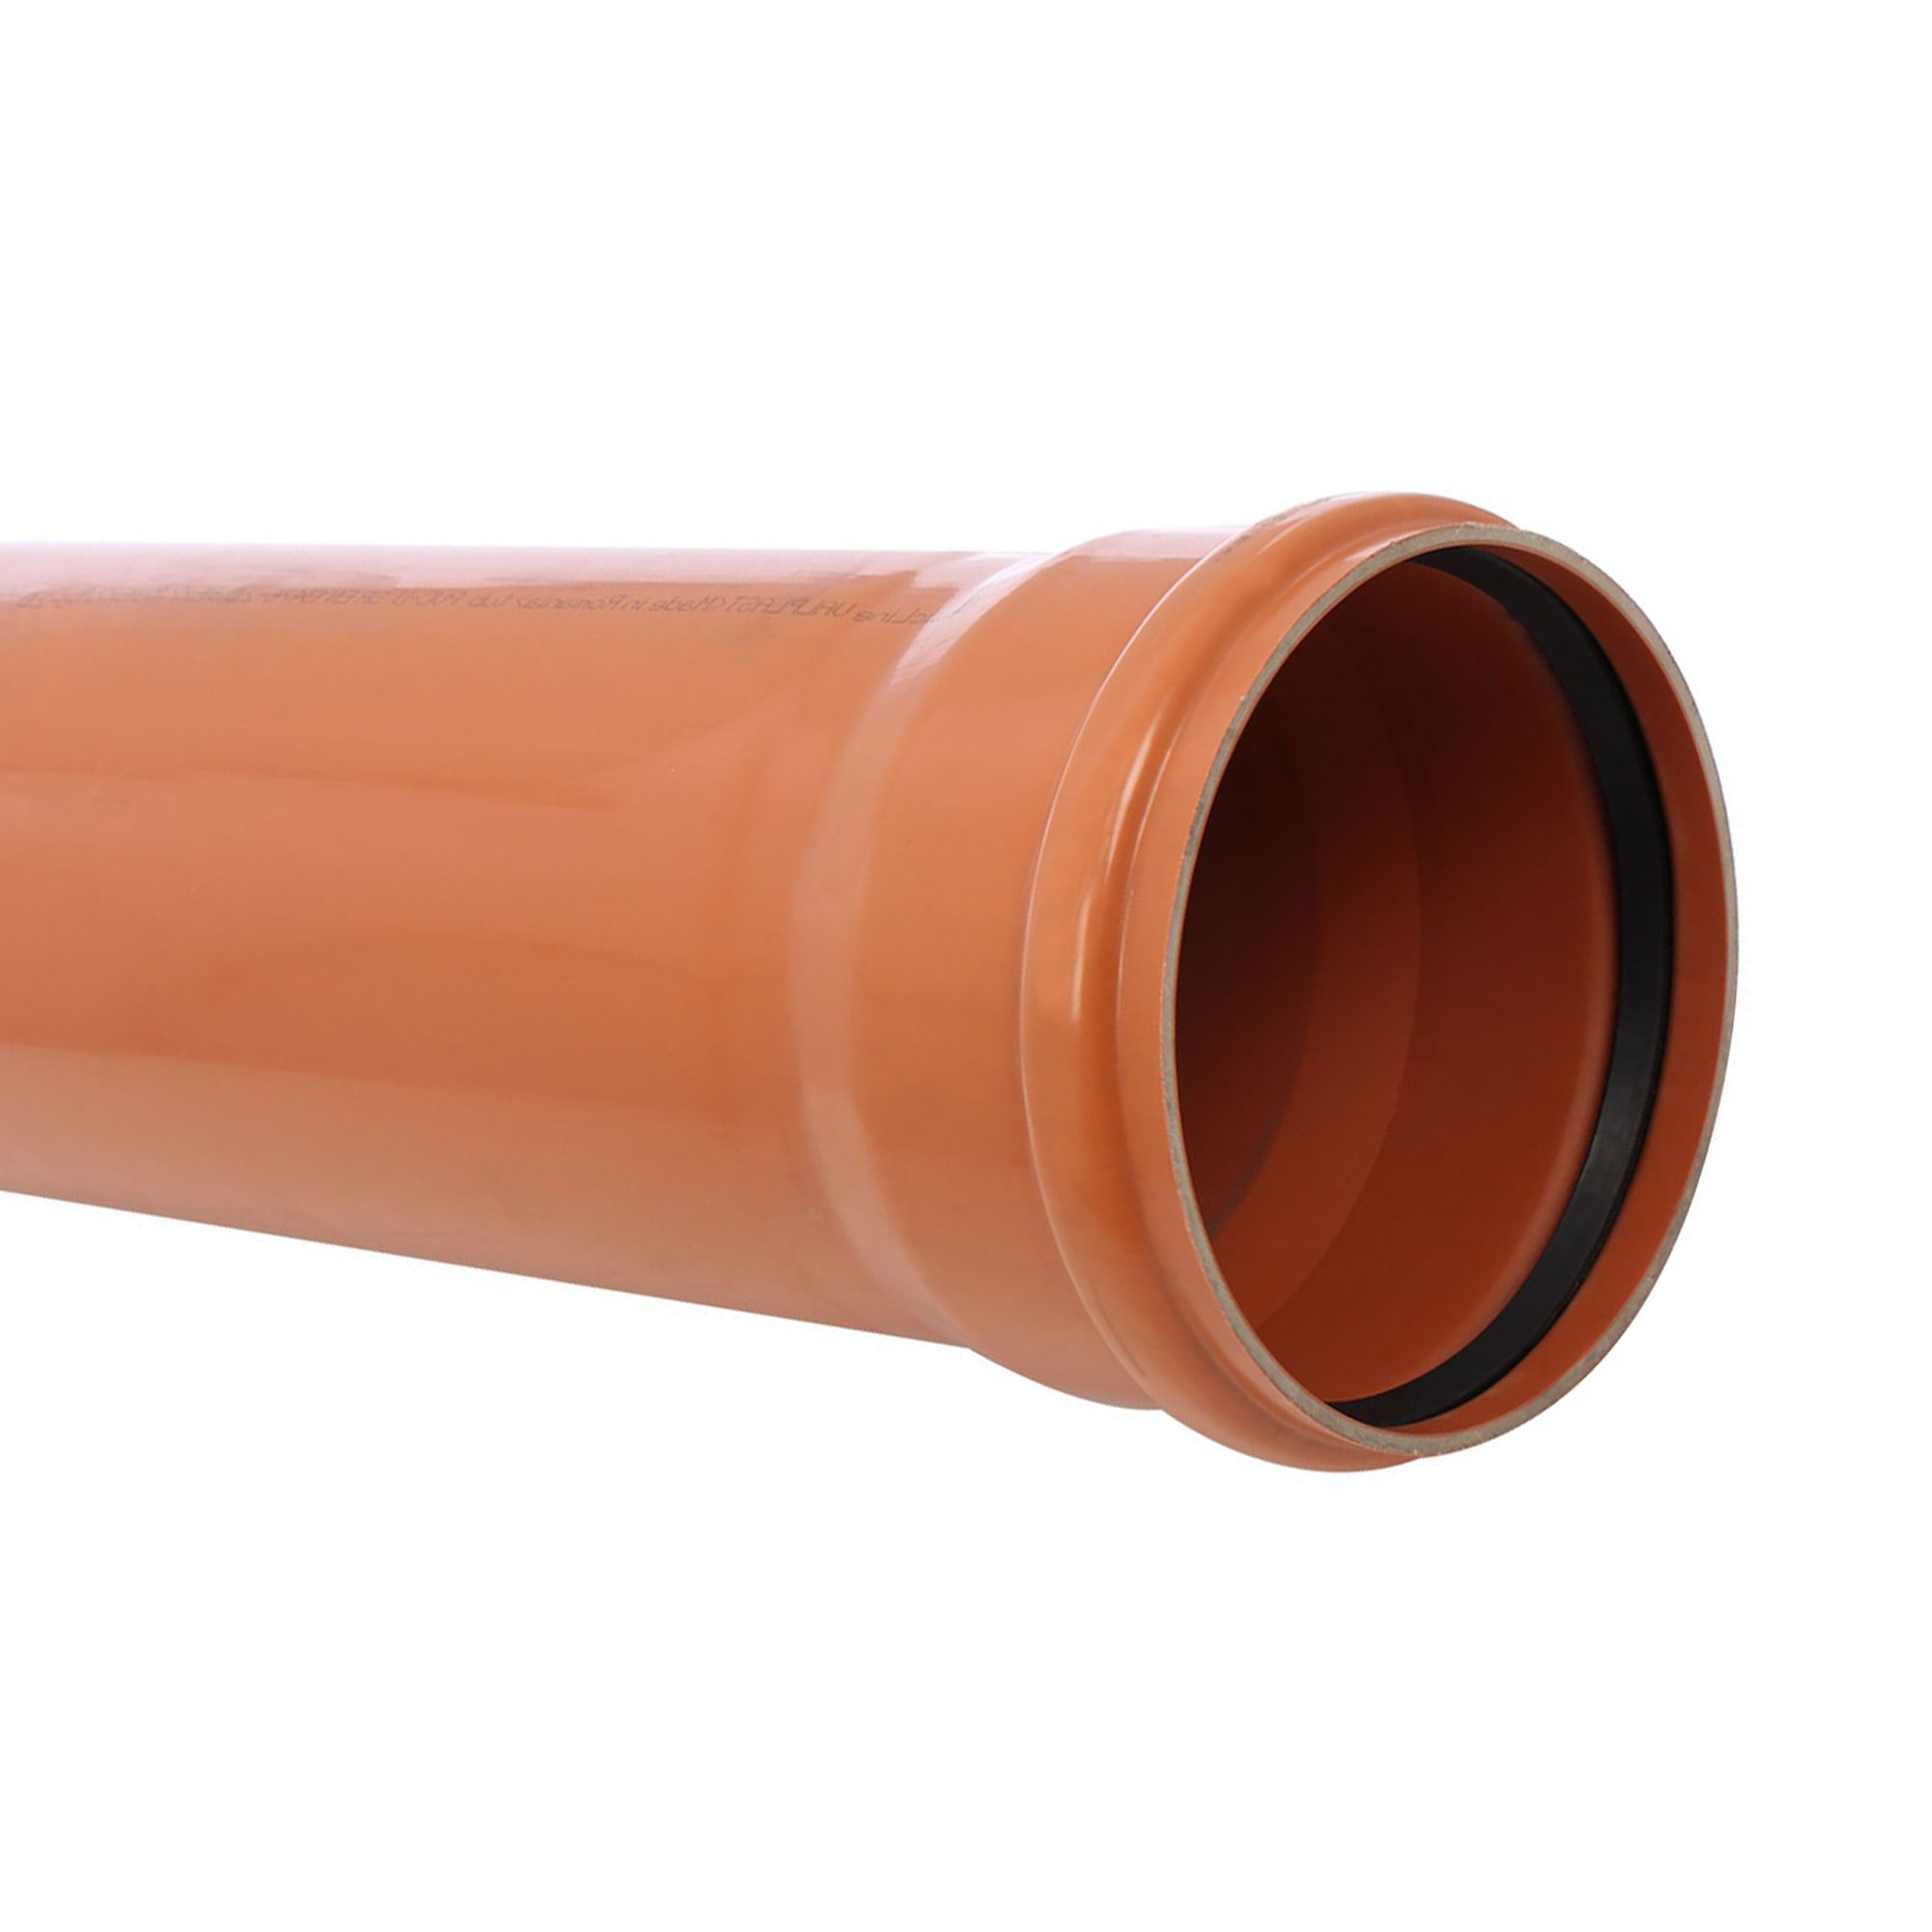 Teava PVC pentru canalizare exterioara, multistrat, SN4, 315 x 7.7 mm, L 2 m